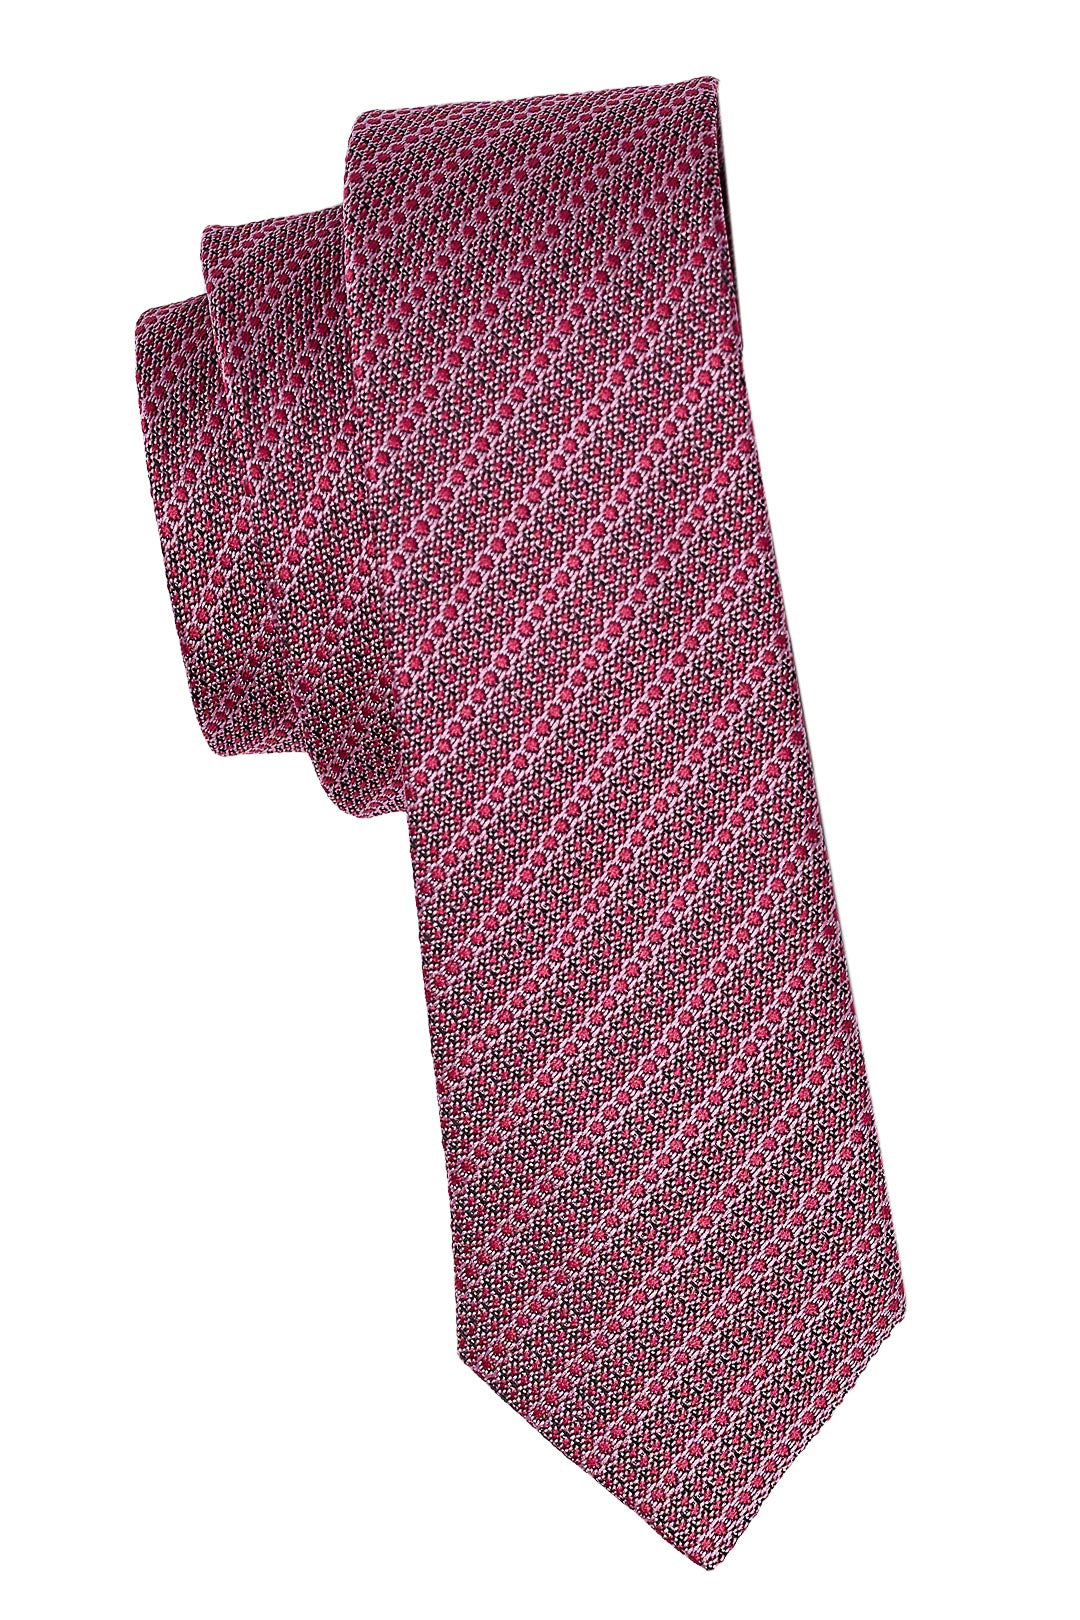 Circle Patterned Pink Tie